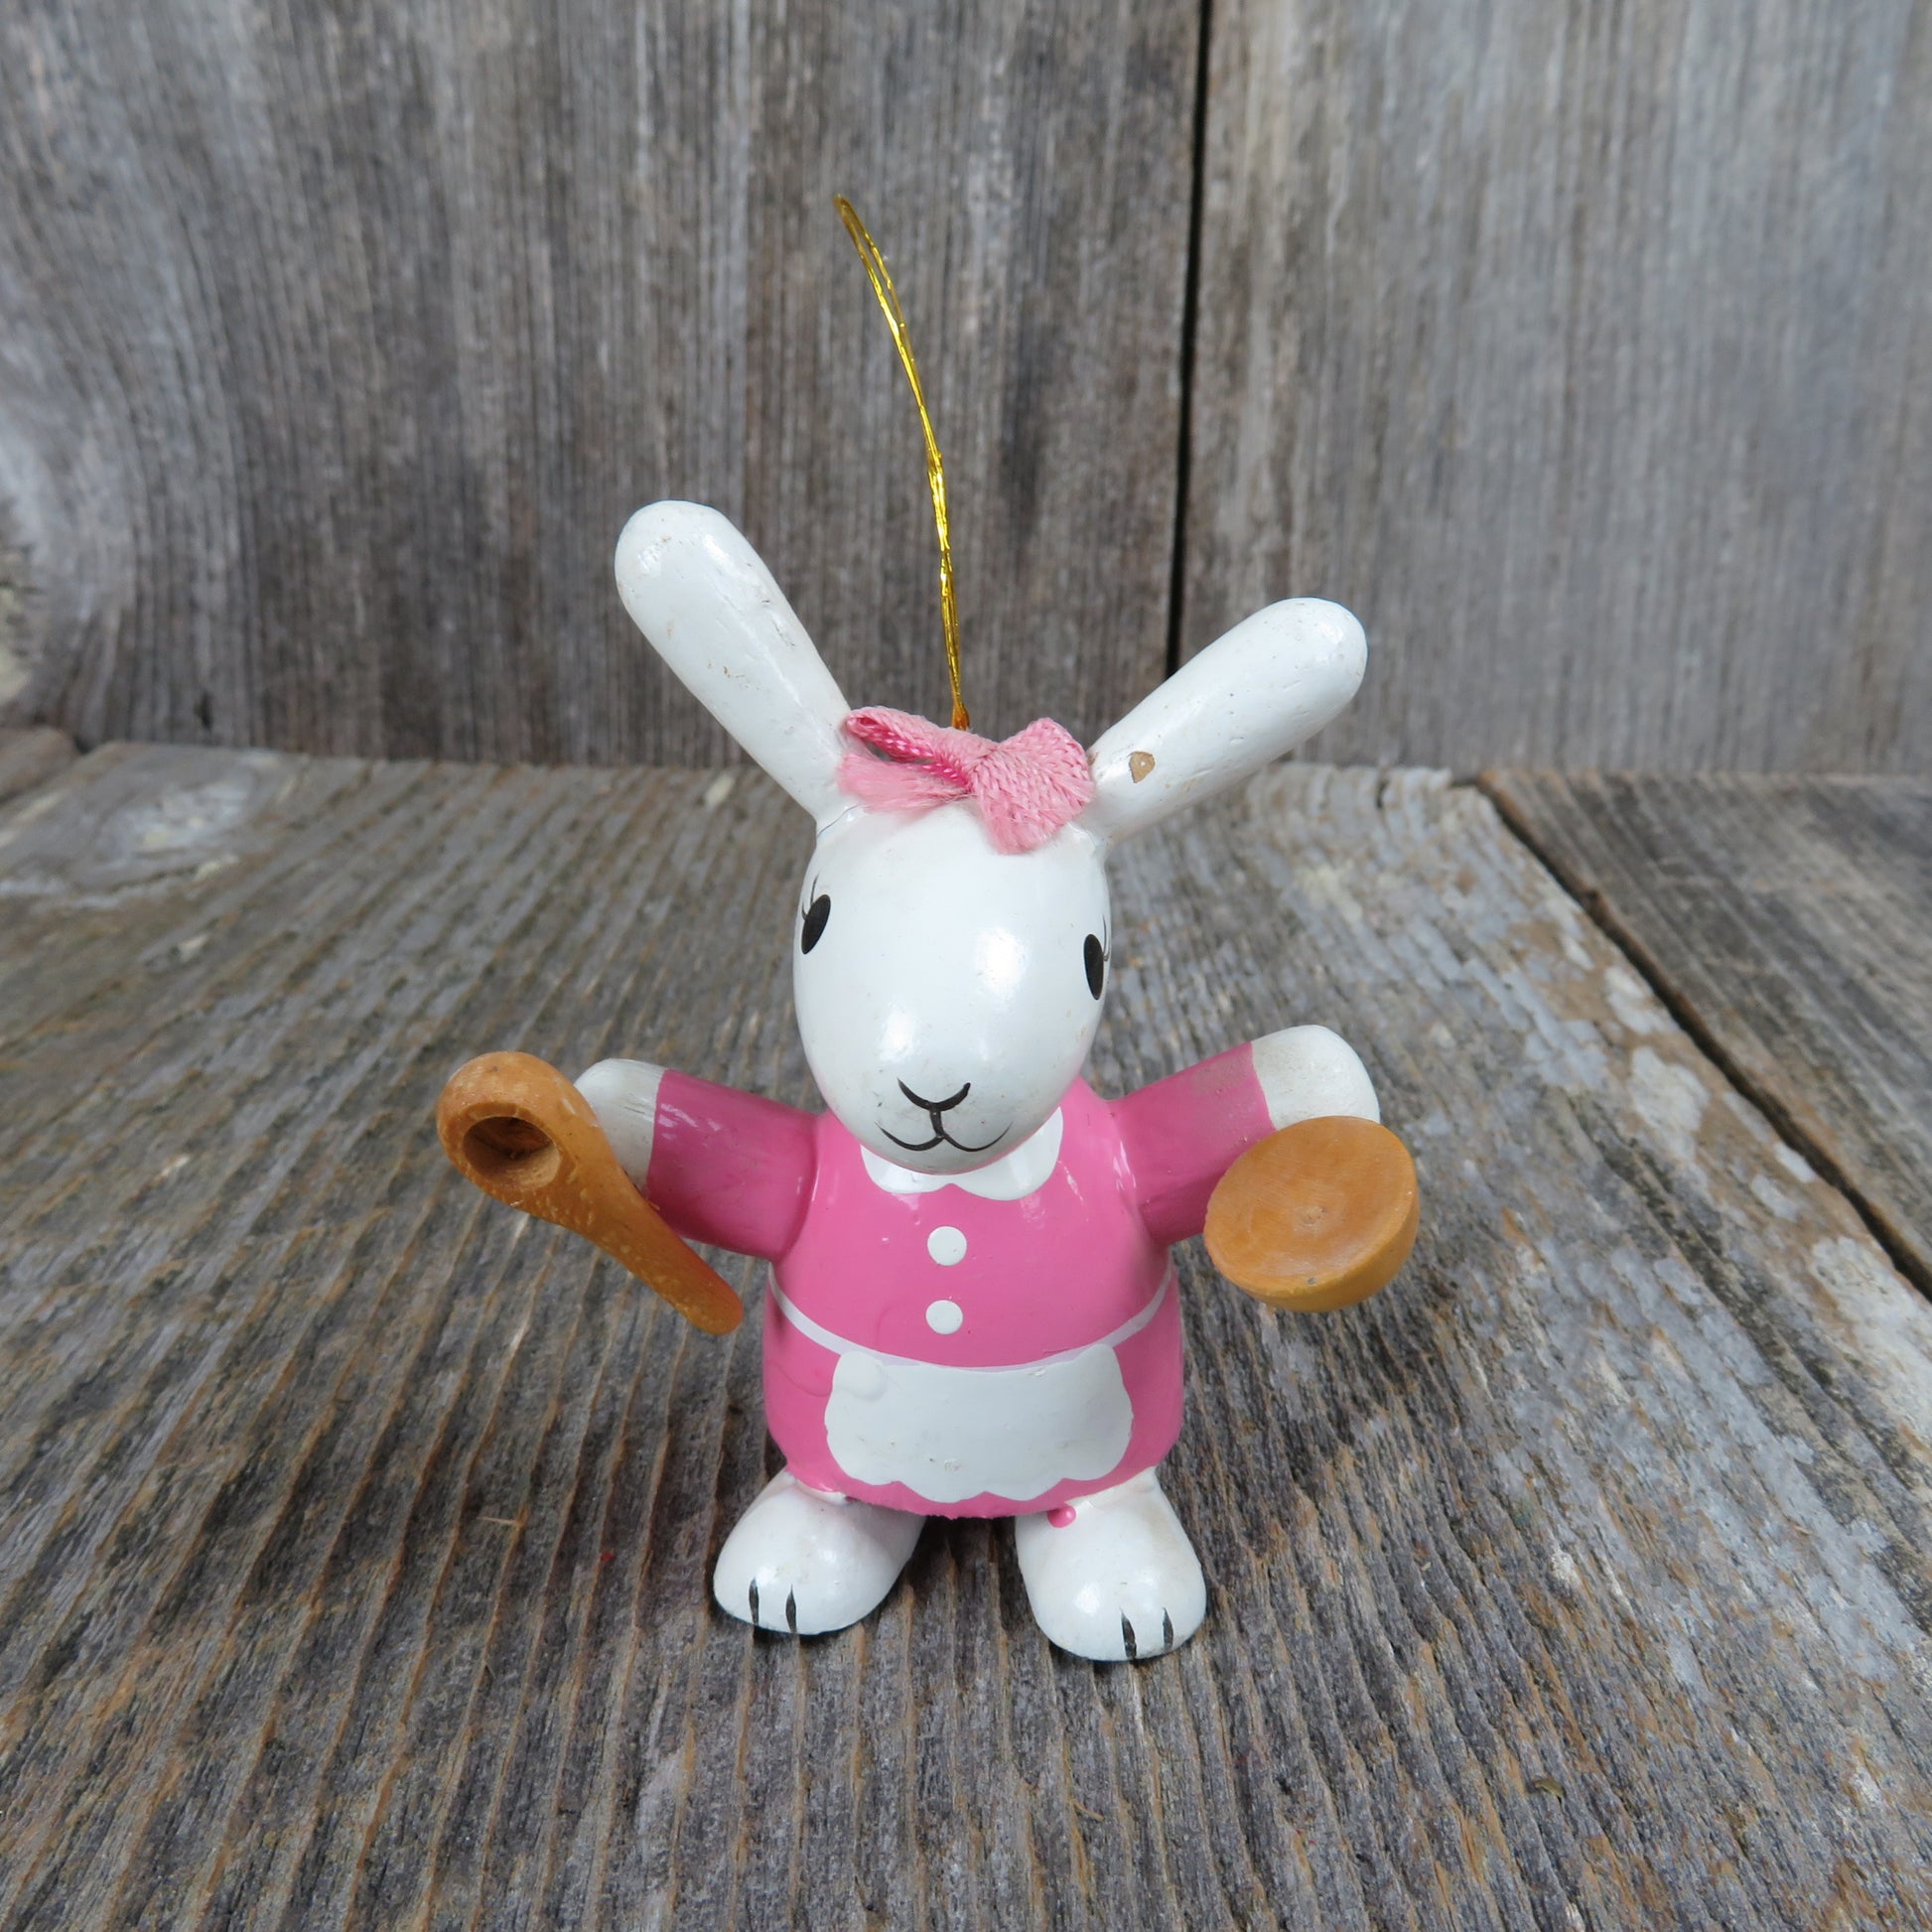 Vintage Bunny Rabbit Baker Ornament Wooden Christmas Wood Pink Easter White Girl - At Grandma's Table